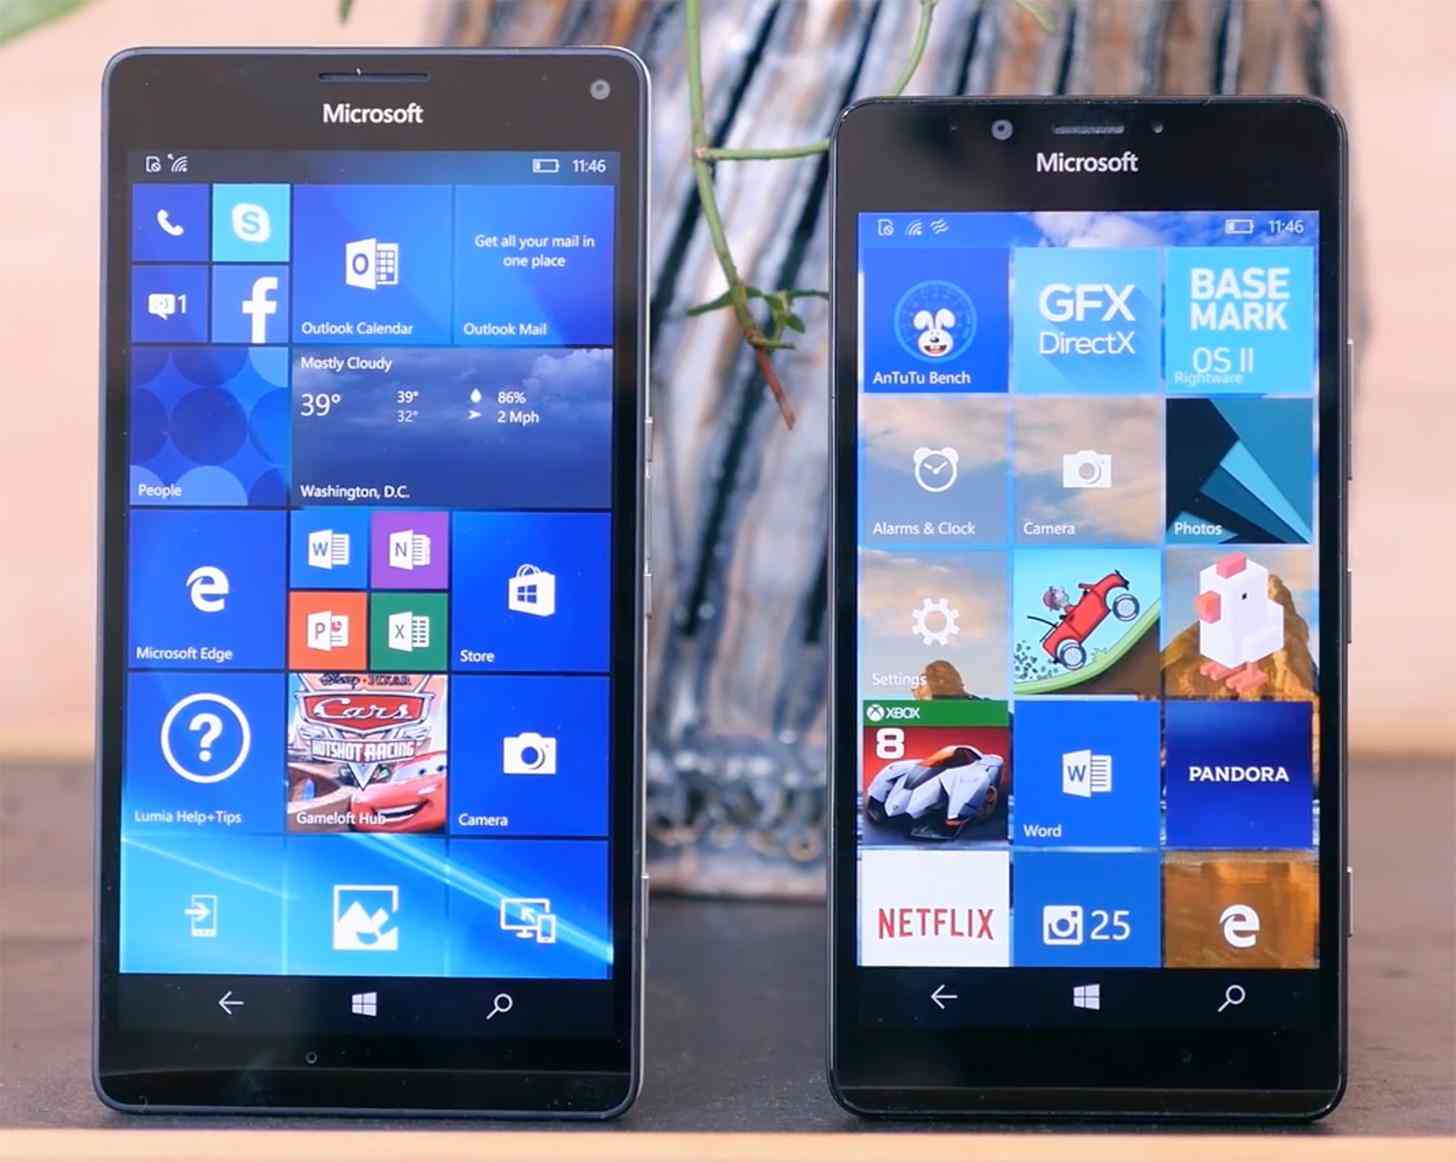 Microsoft Lumia 950 XL, Lumia 950 hands-on video